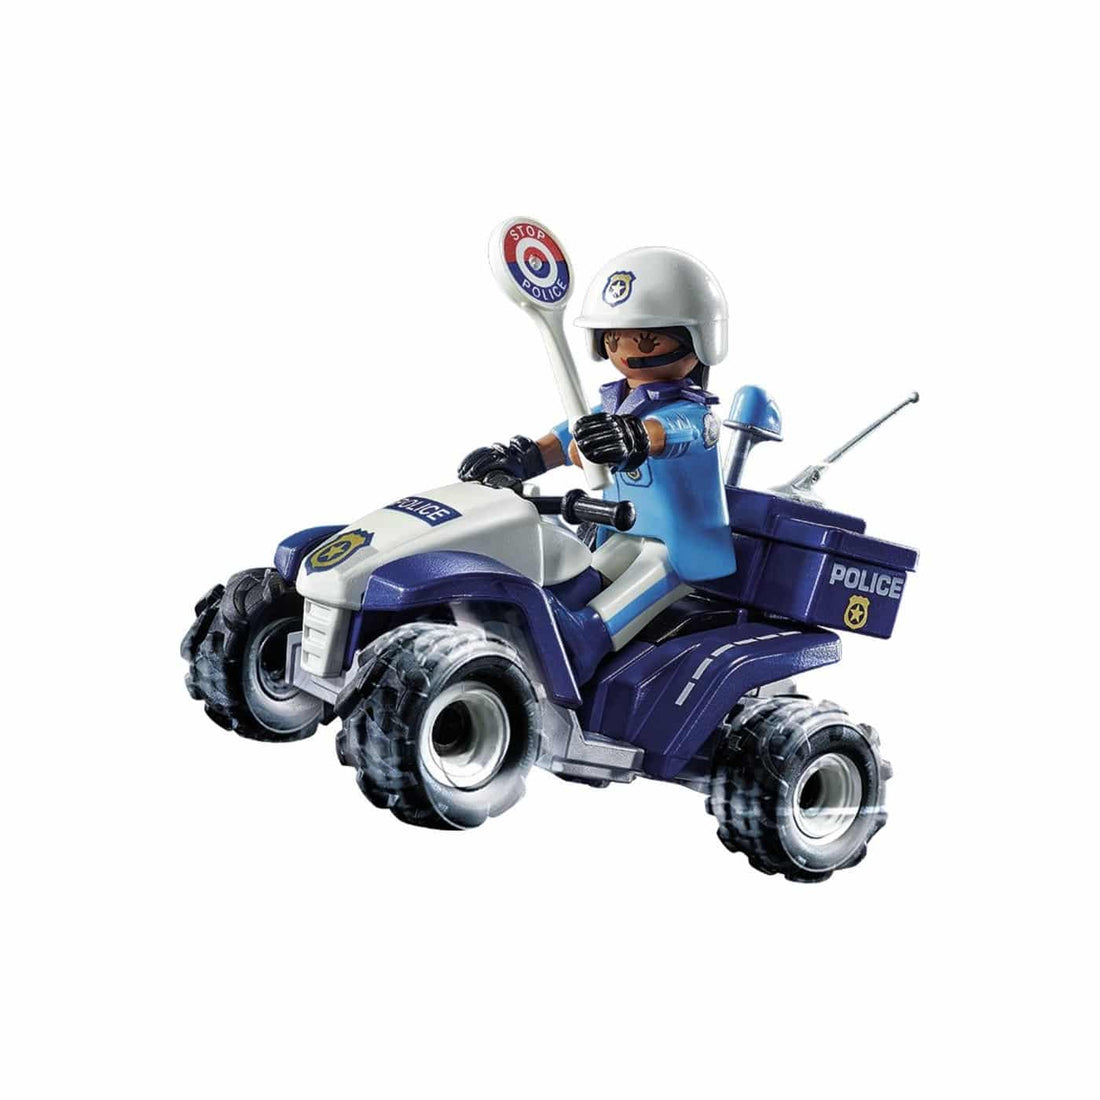 71092 Playmobil City Action Αστυνομικος Με Γουρουνα 4Χ4